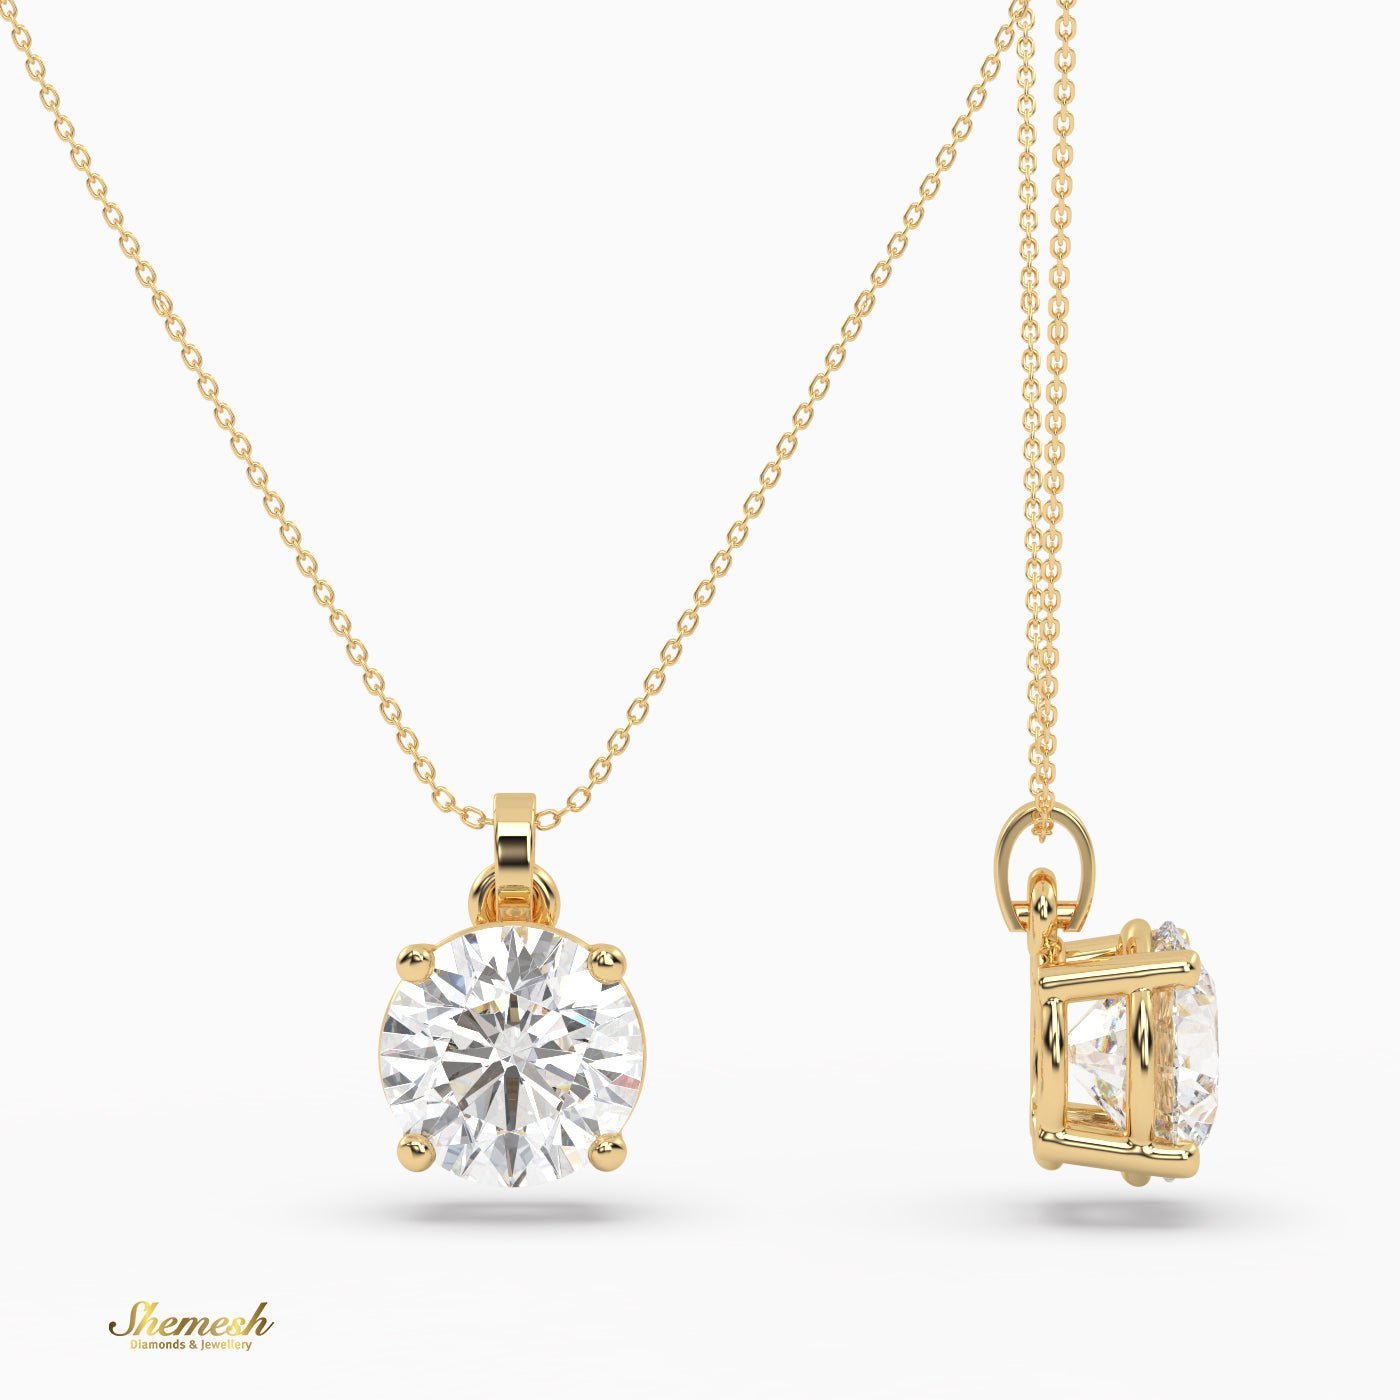 18k Gold 1.50 Carat Round Cut Diamond Pendant - shemesh_diamonds